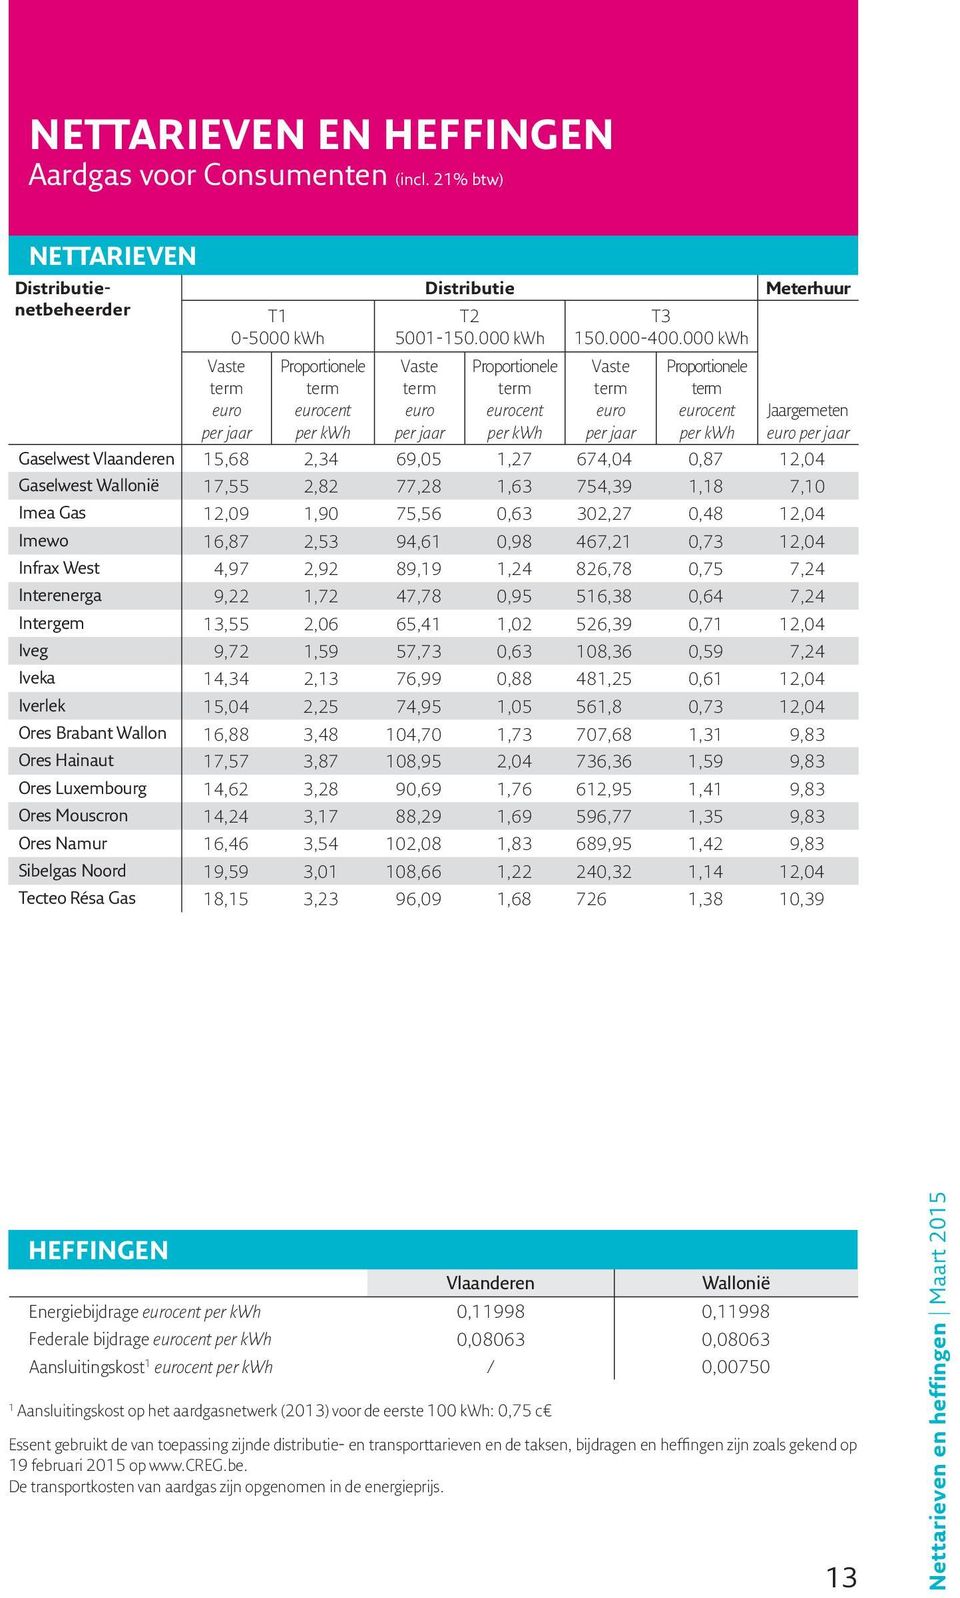 000 kwh Vaste euro per jaar Proportionele eurocent per kwh Jaargemeten euro per jaar Gaselwest Vlaanderen 15,68 2,34 69,05 1,27 674,04 0,87 12,04 Gaselwest Wallonië 17,55 2,82 77,28 1,63 754,39 1,18